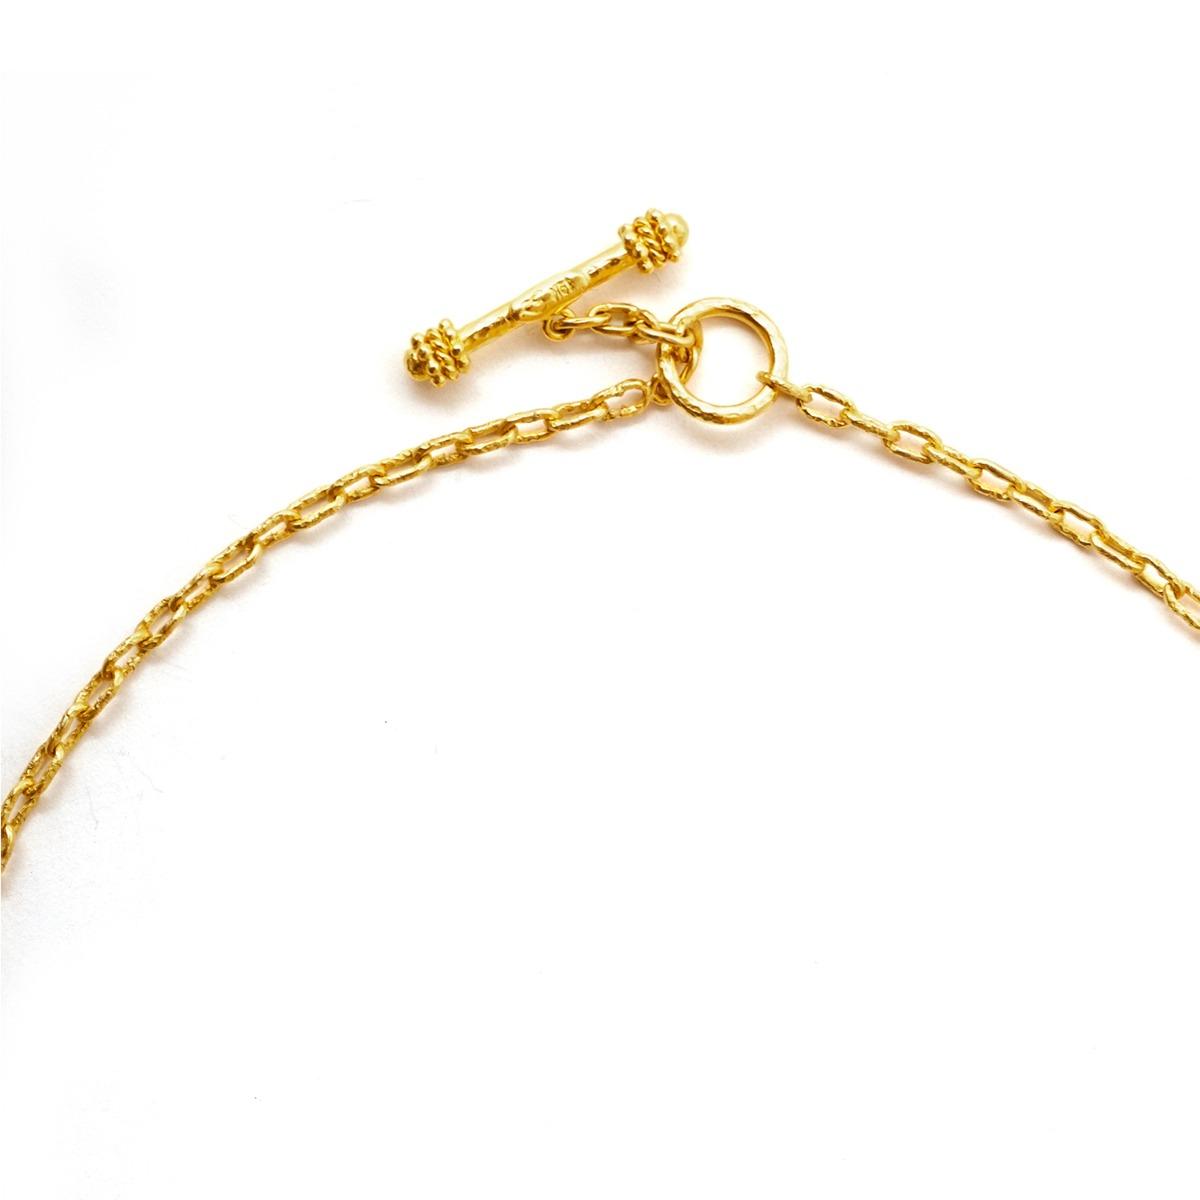 Elizabeth Locke Very Fine Gold Chain Necklace - 17 inches  1